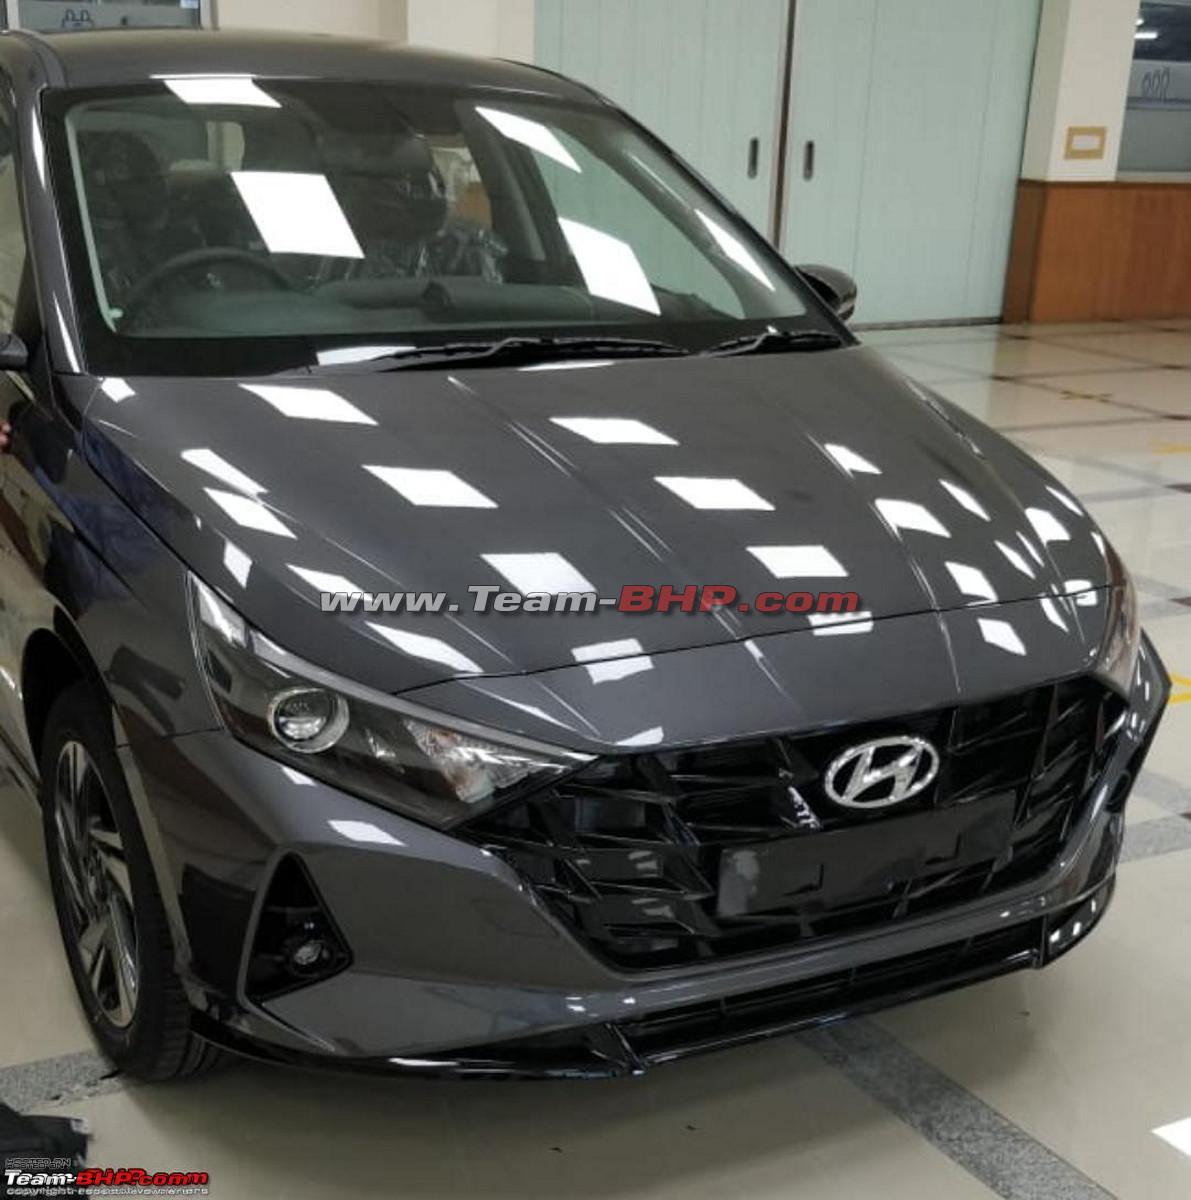 What do you think of Hyundai's new design language? - Team-BHP